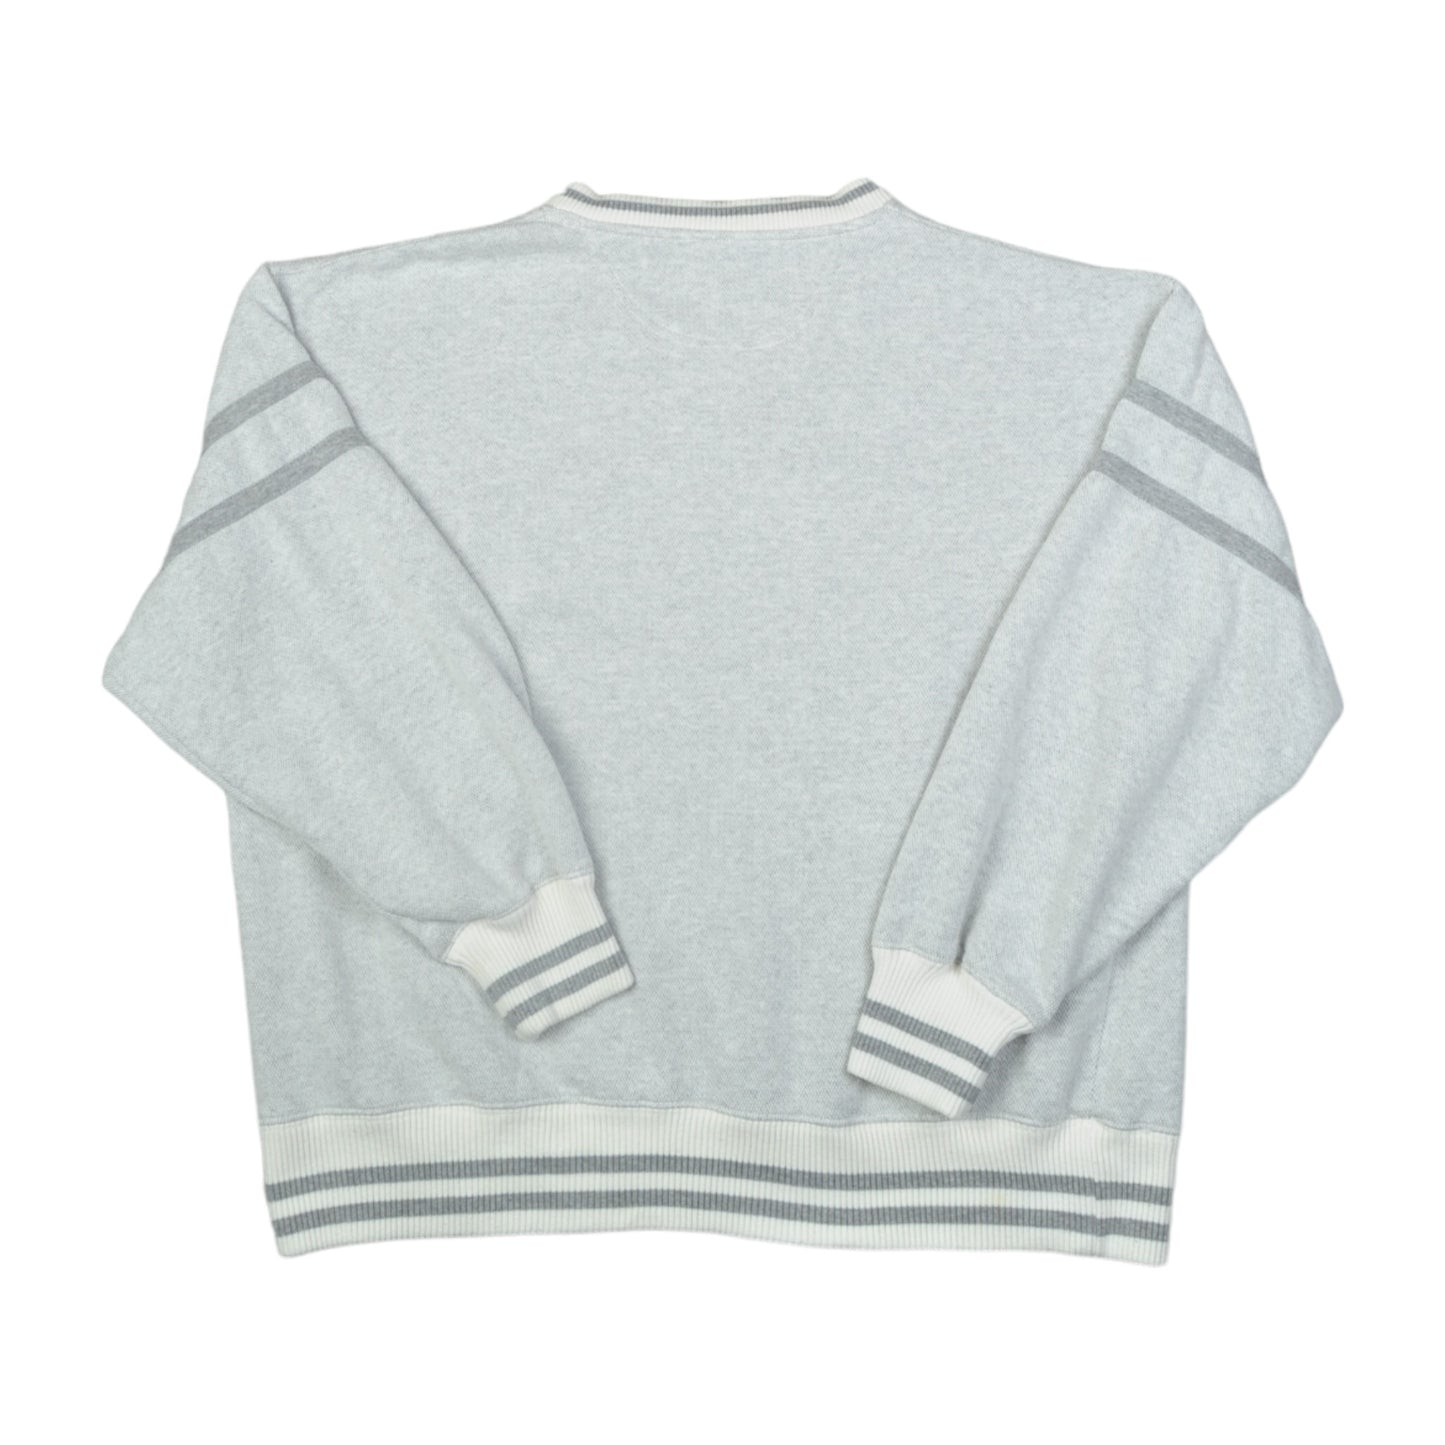 Vintage Nebraska Huskies Sweater Grey XL